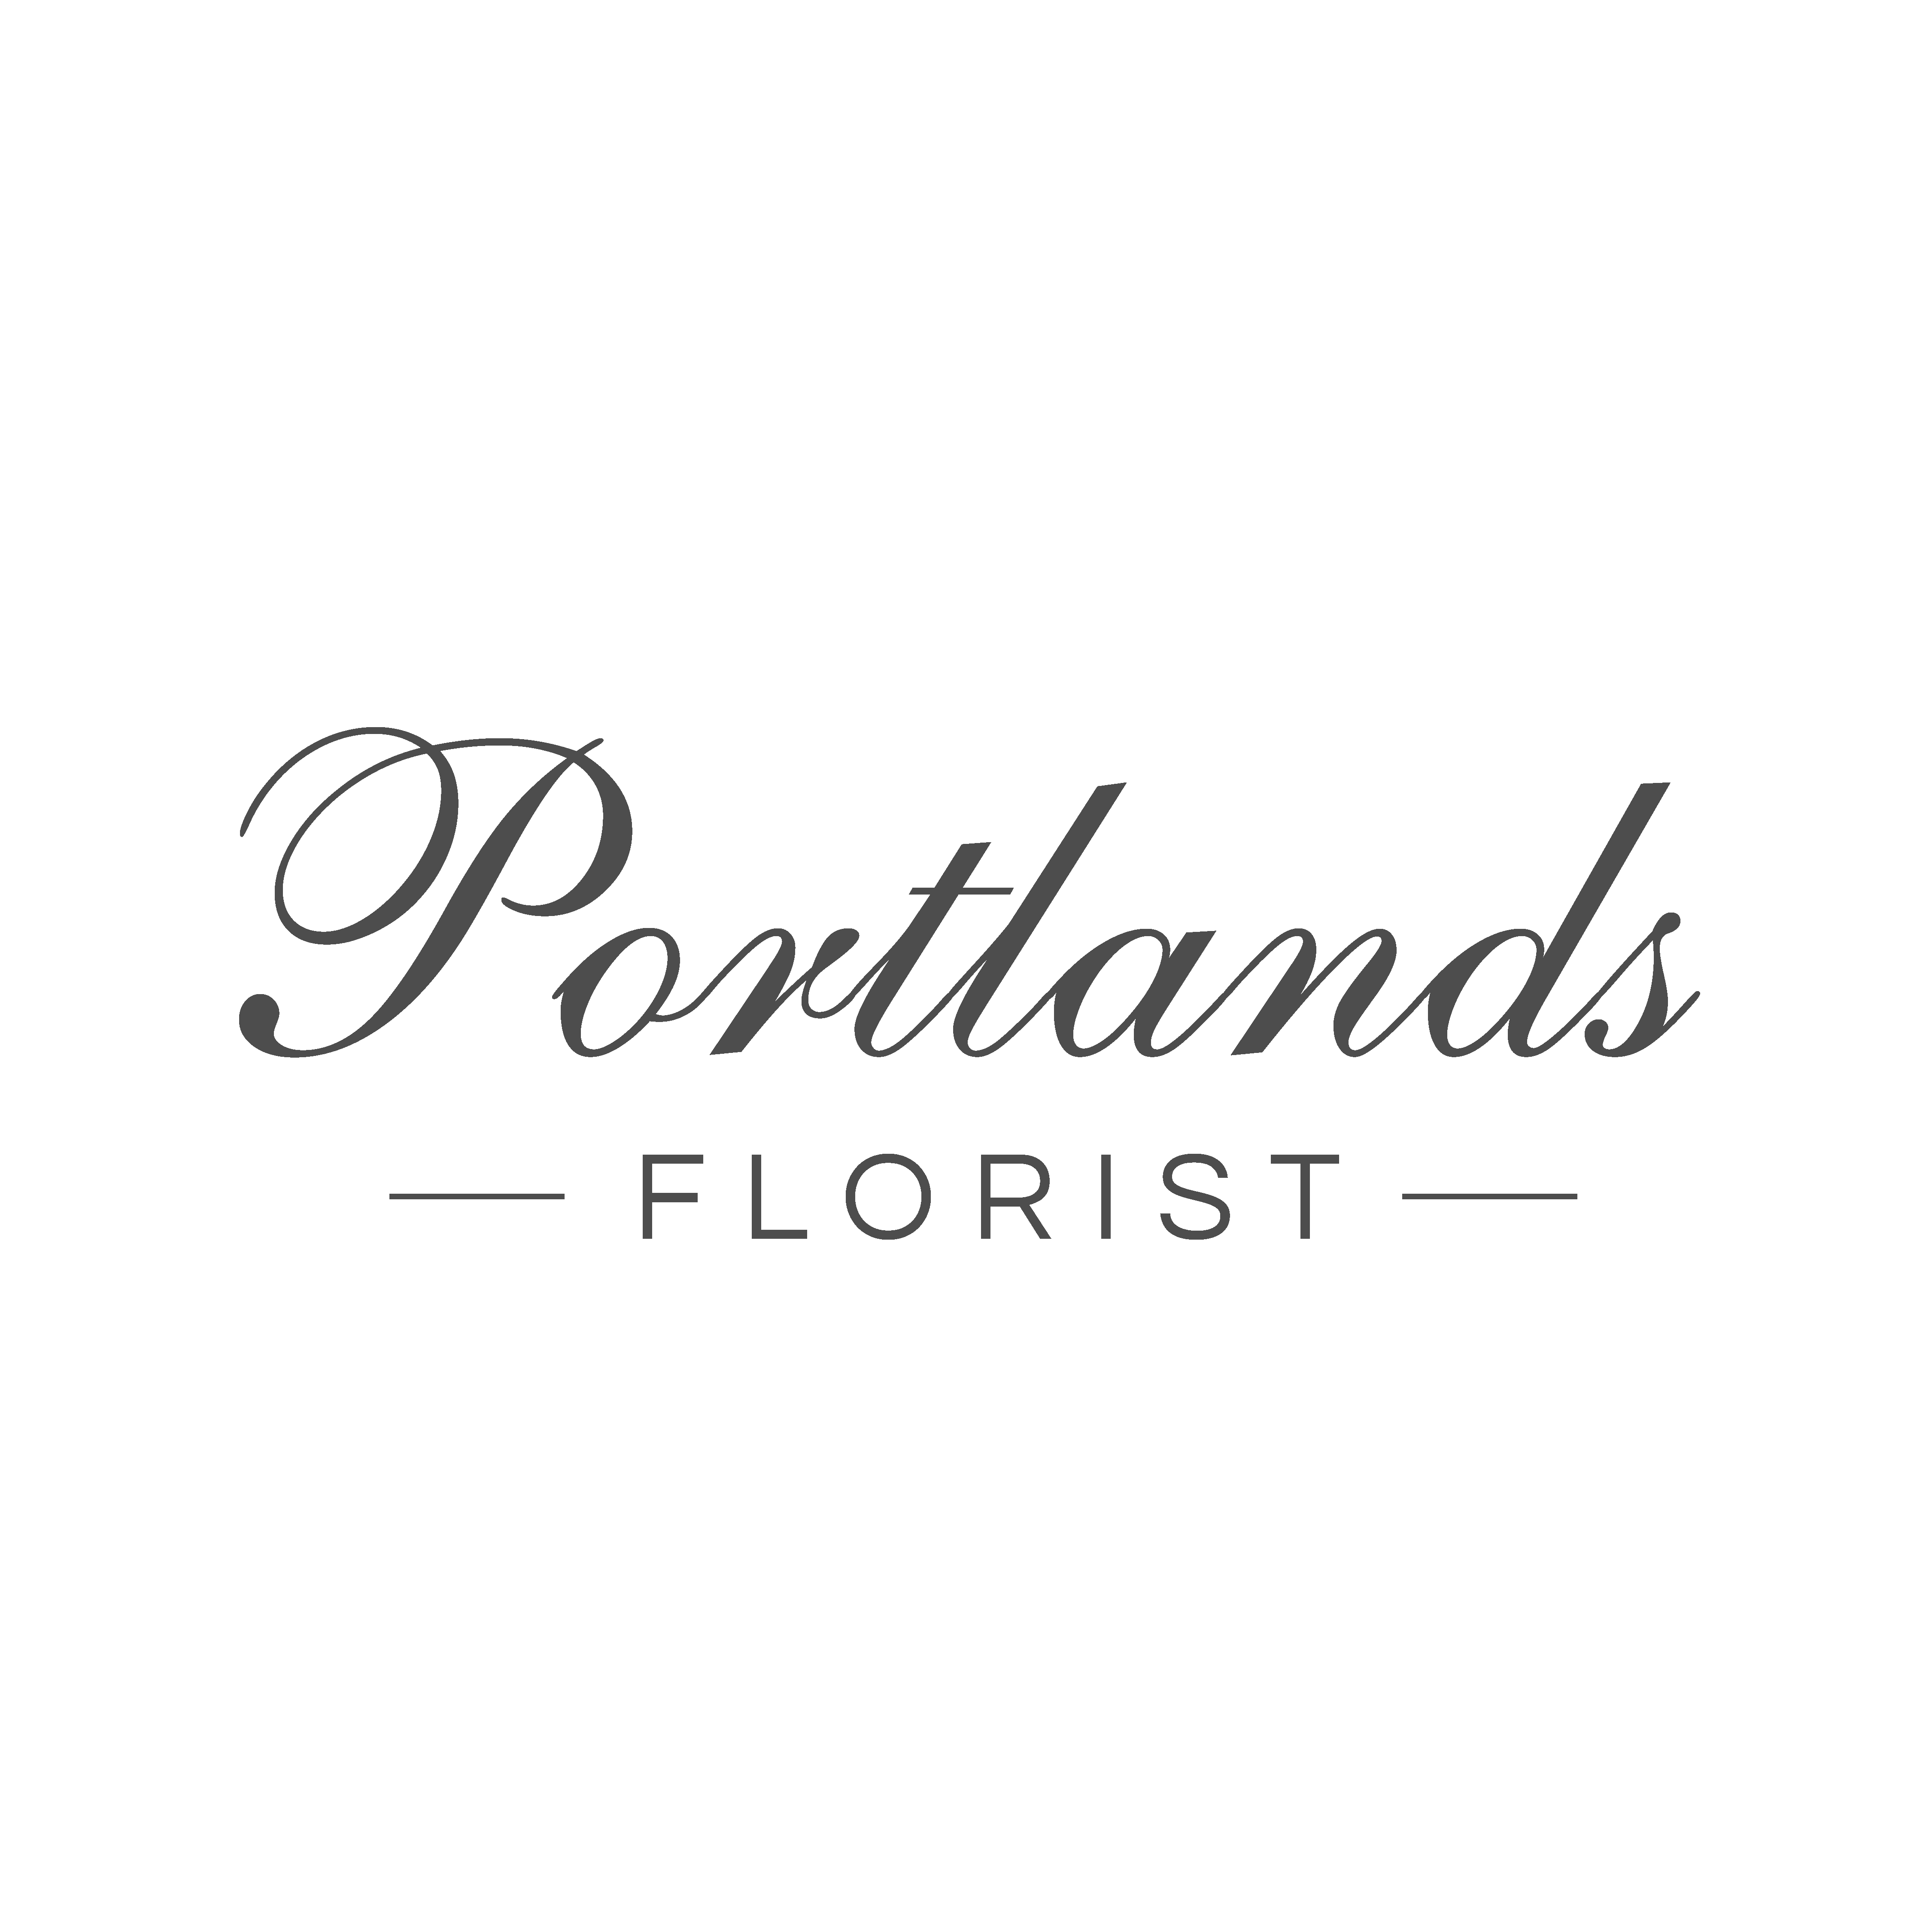 Portlands Florist Transparent Logo